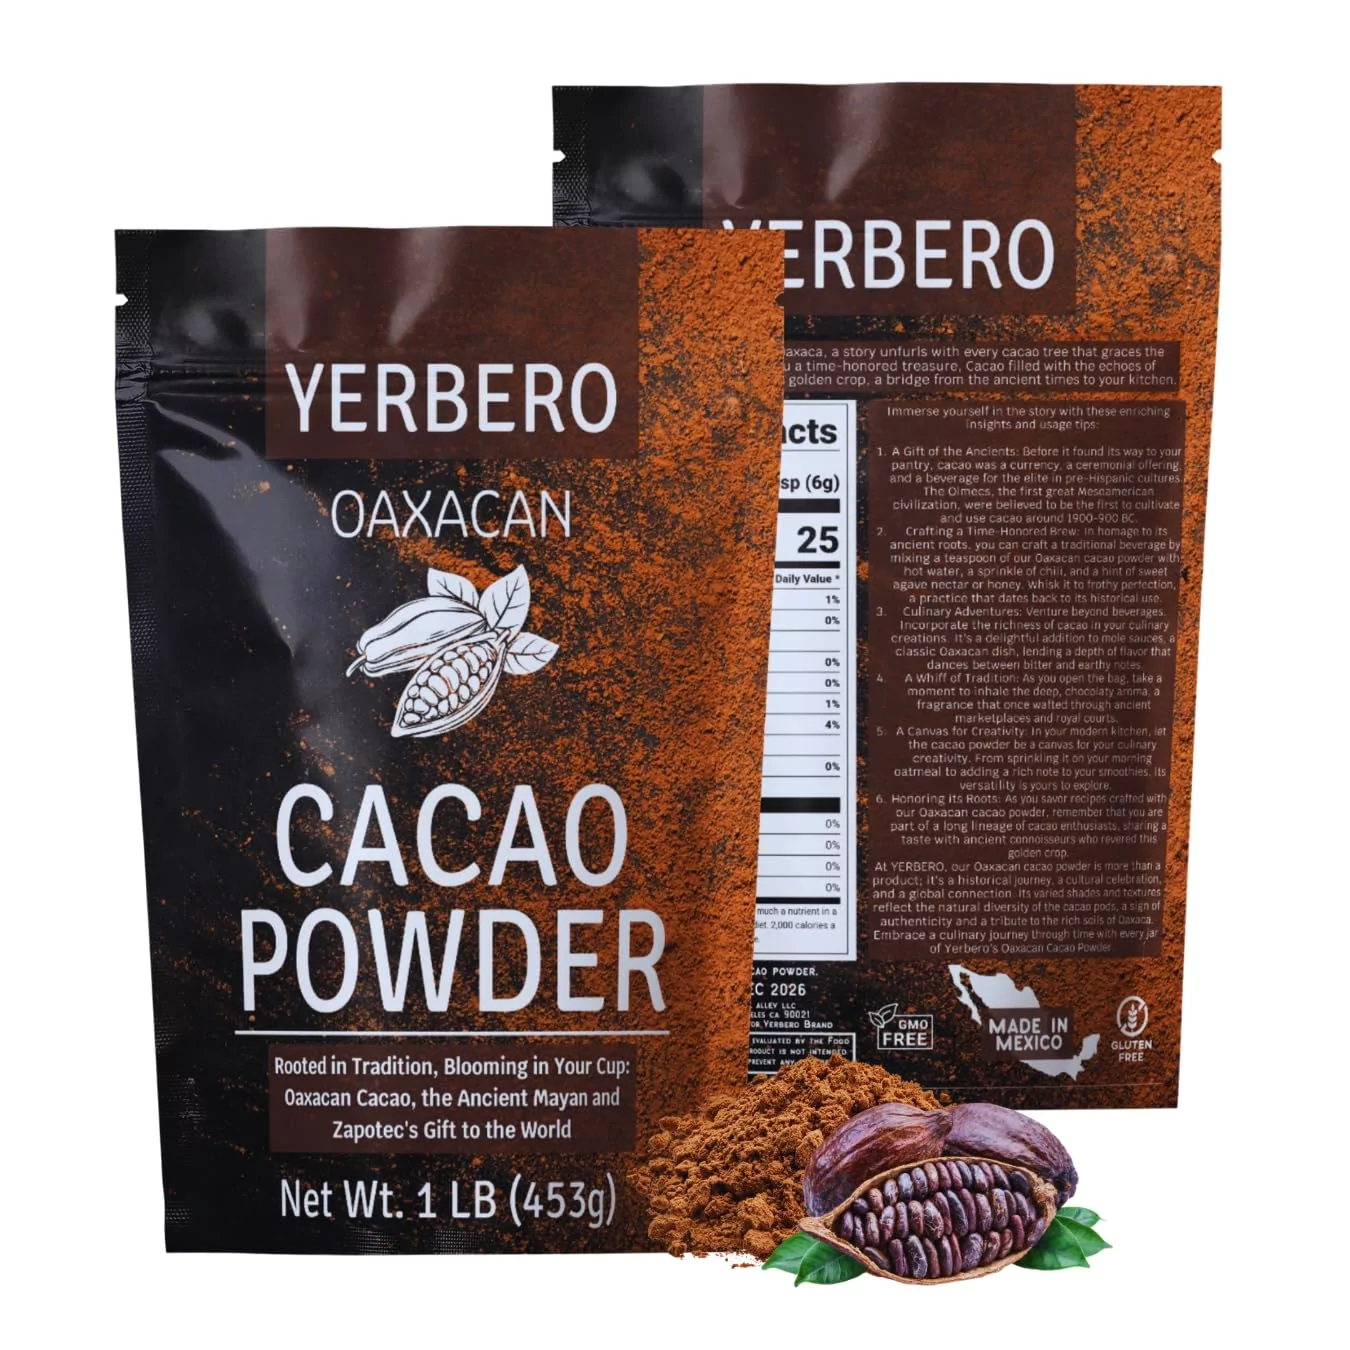 Sentiment analysis for Yerbero Oaxacan Cacao Powder.